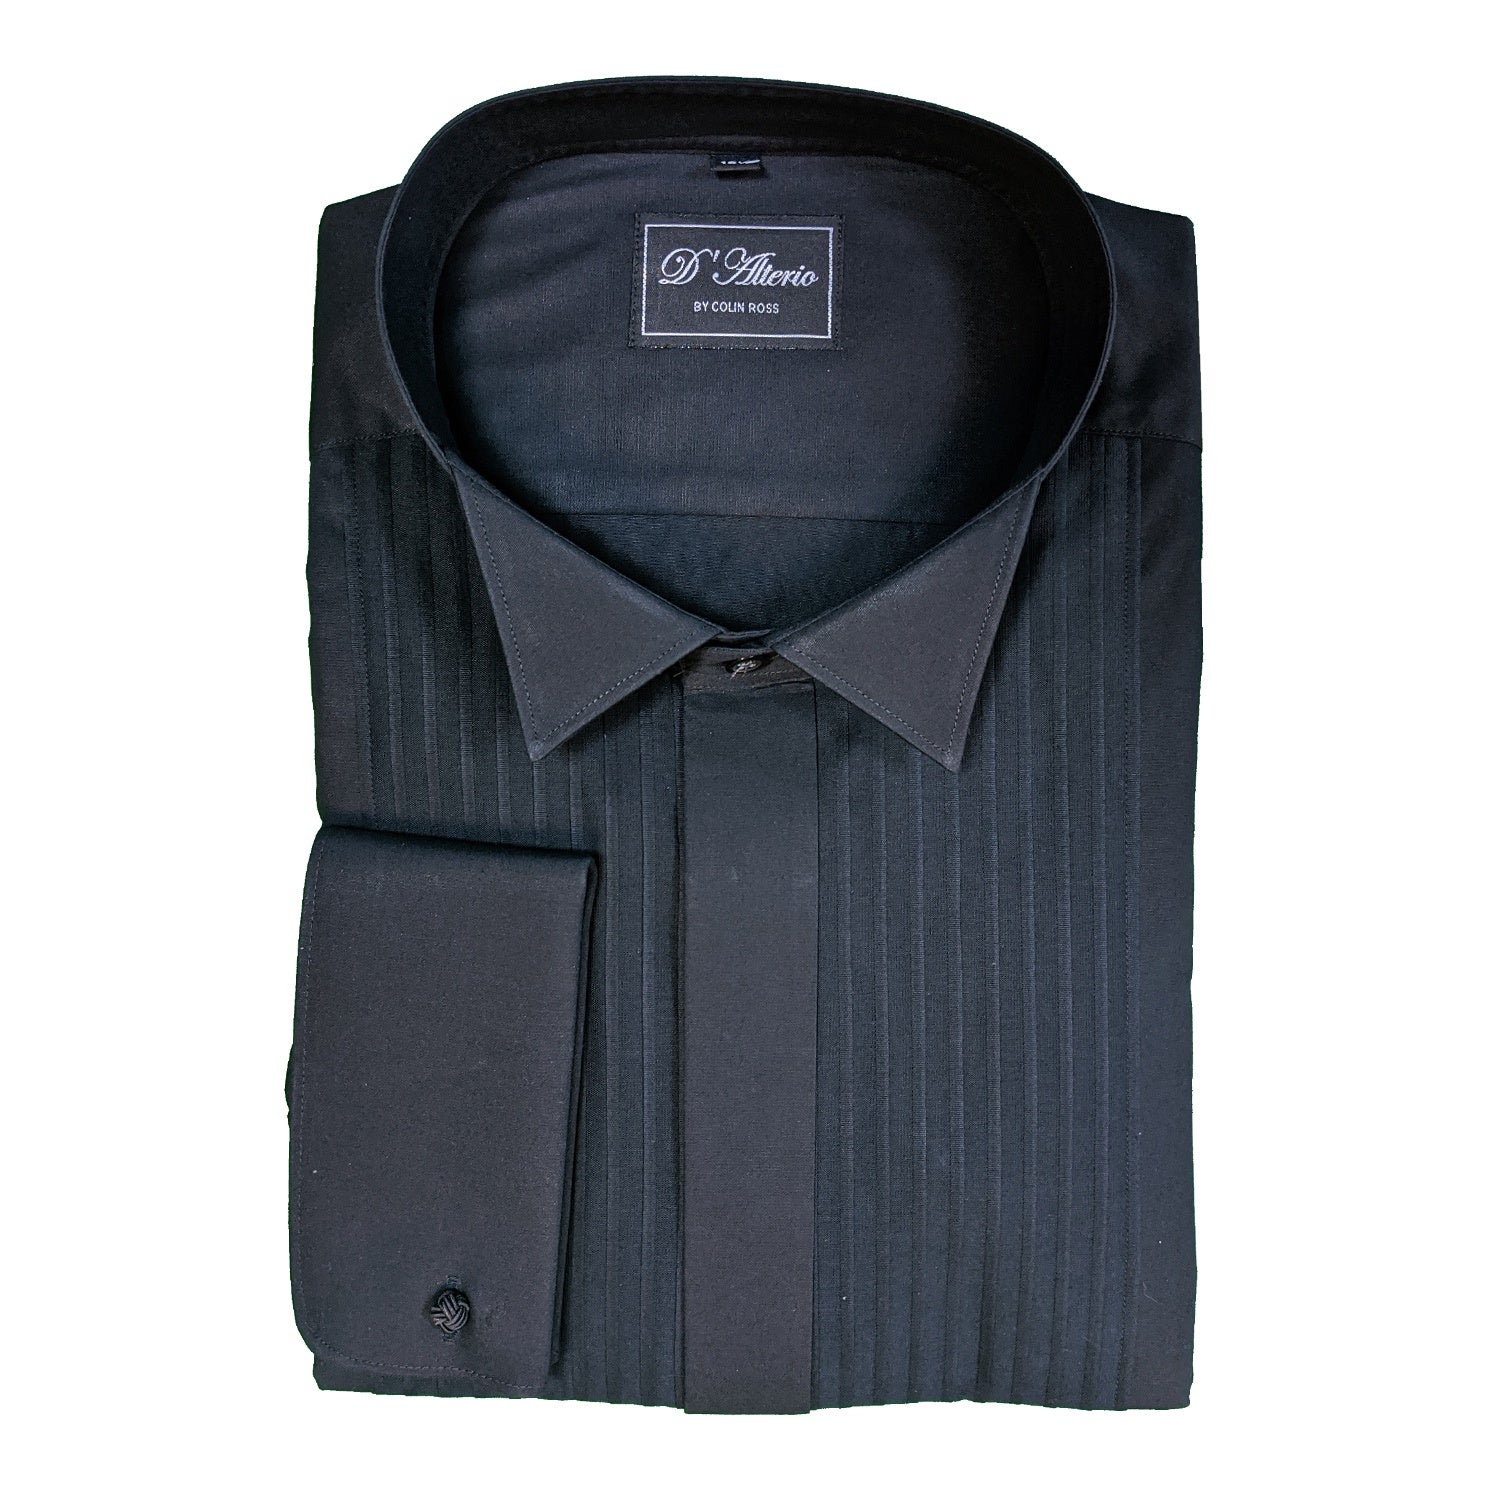 D'Alterio Wing Collar Dress Shirt - 21831 - Black 1